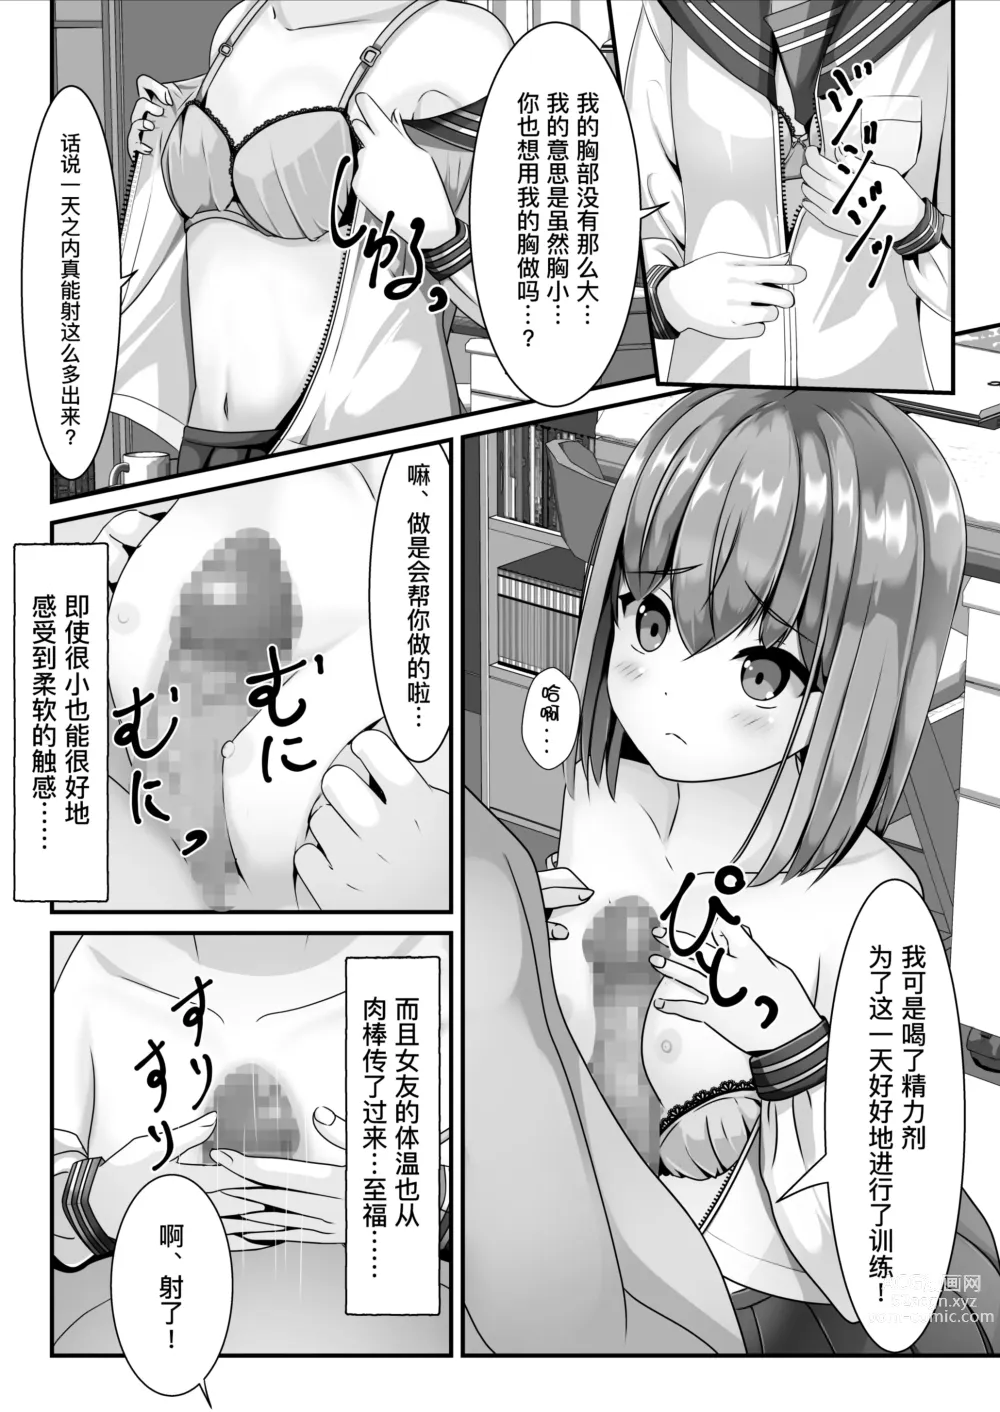 Page 9 of doujinshi 她说毕业之后可以把精液射在制服上